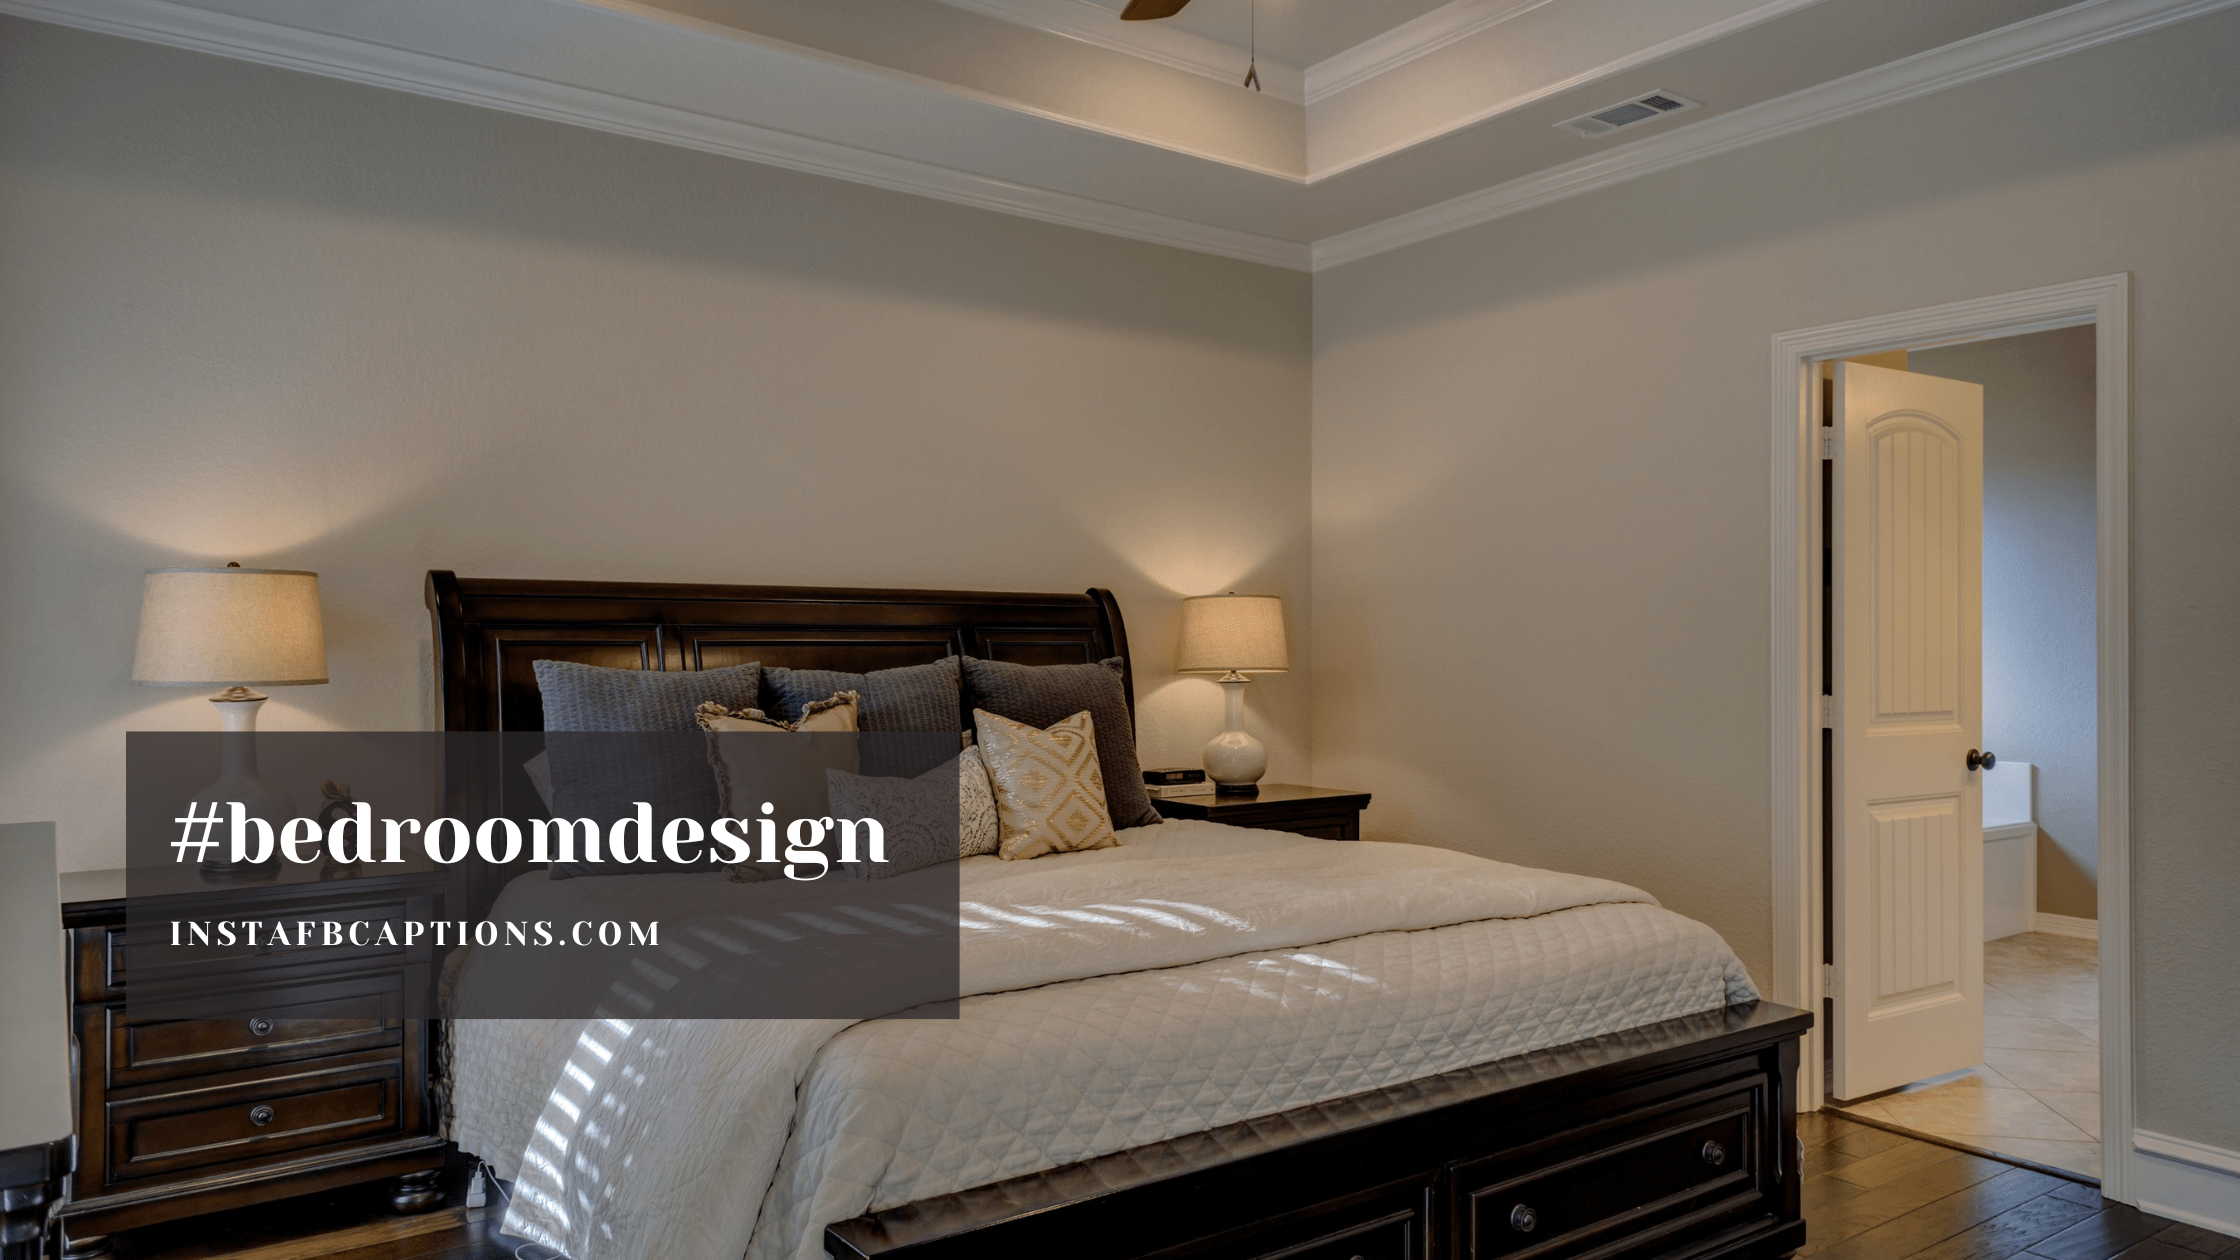 Bedroom Interior Design Hashtags  - Bedroom Interior Design Hashtags - Bedroom Interior Design Captions for Instagram